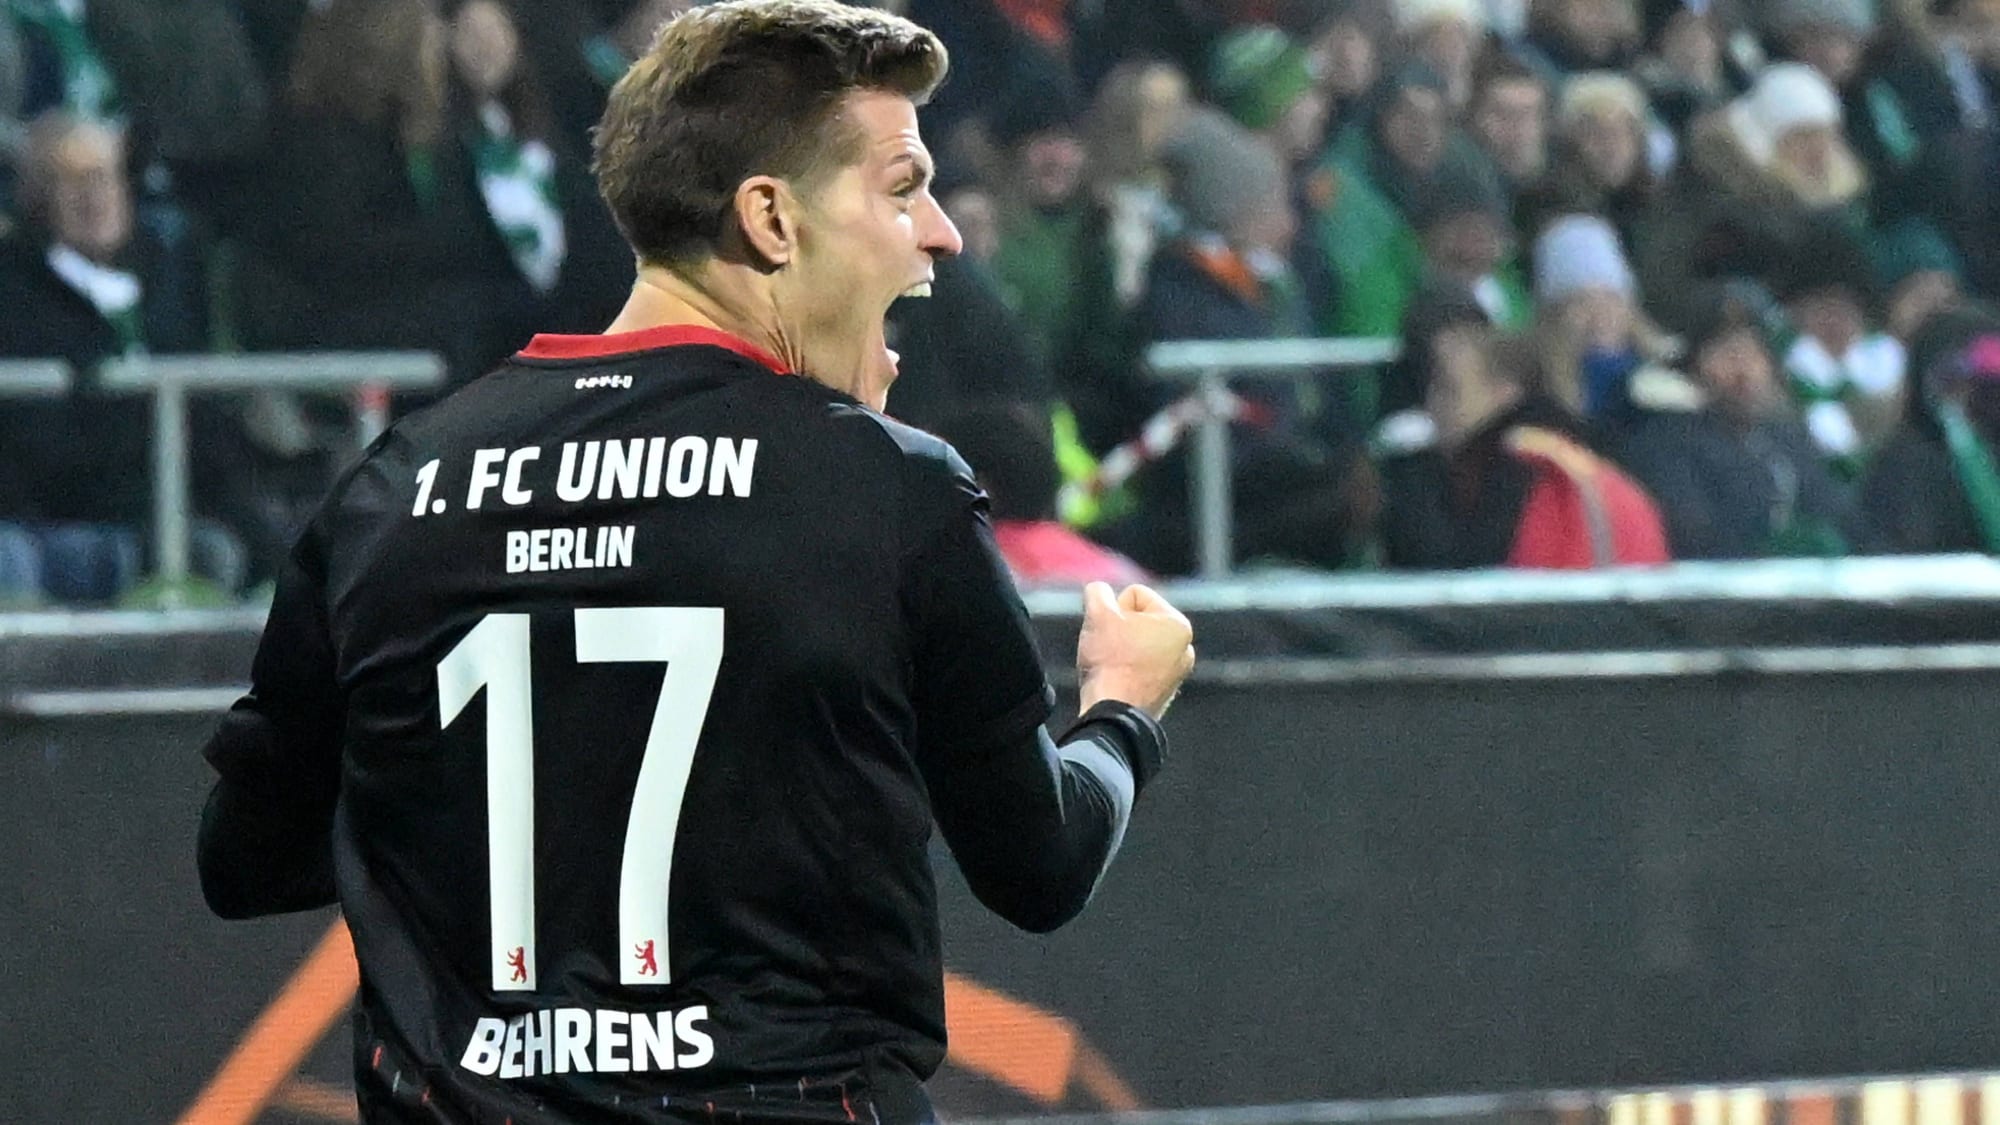 (1. FC Union Berlin)